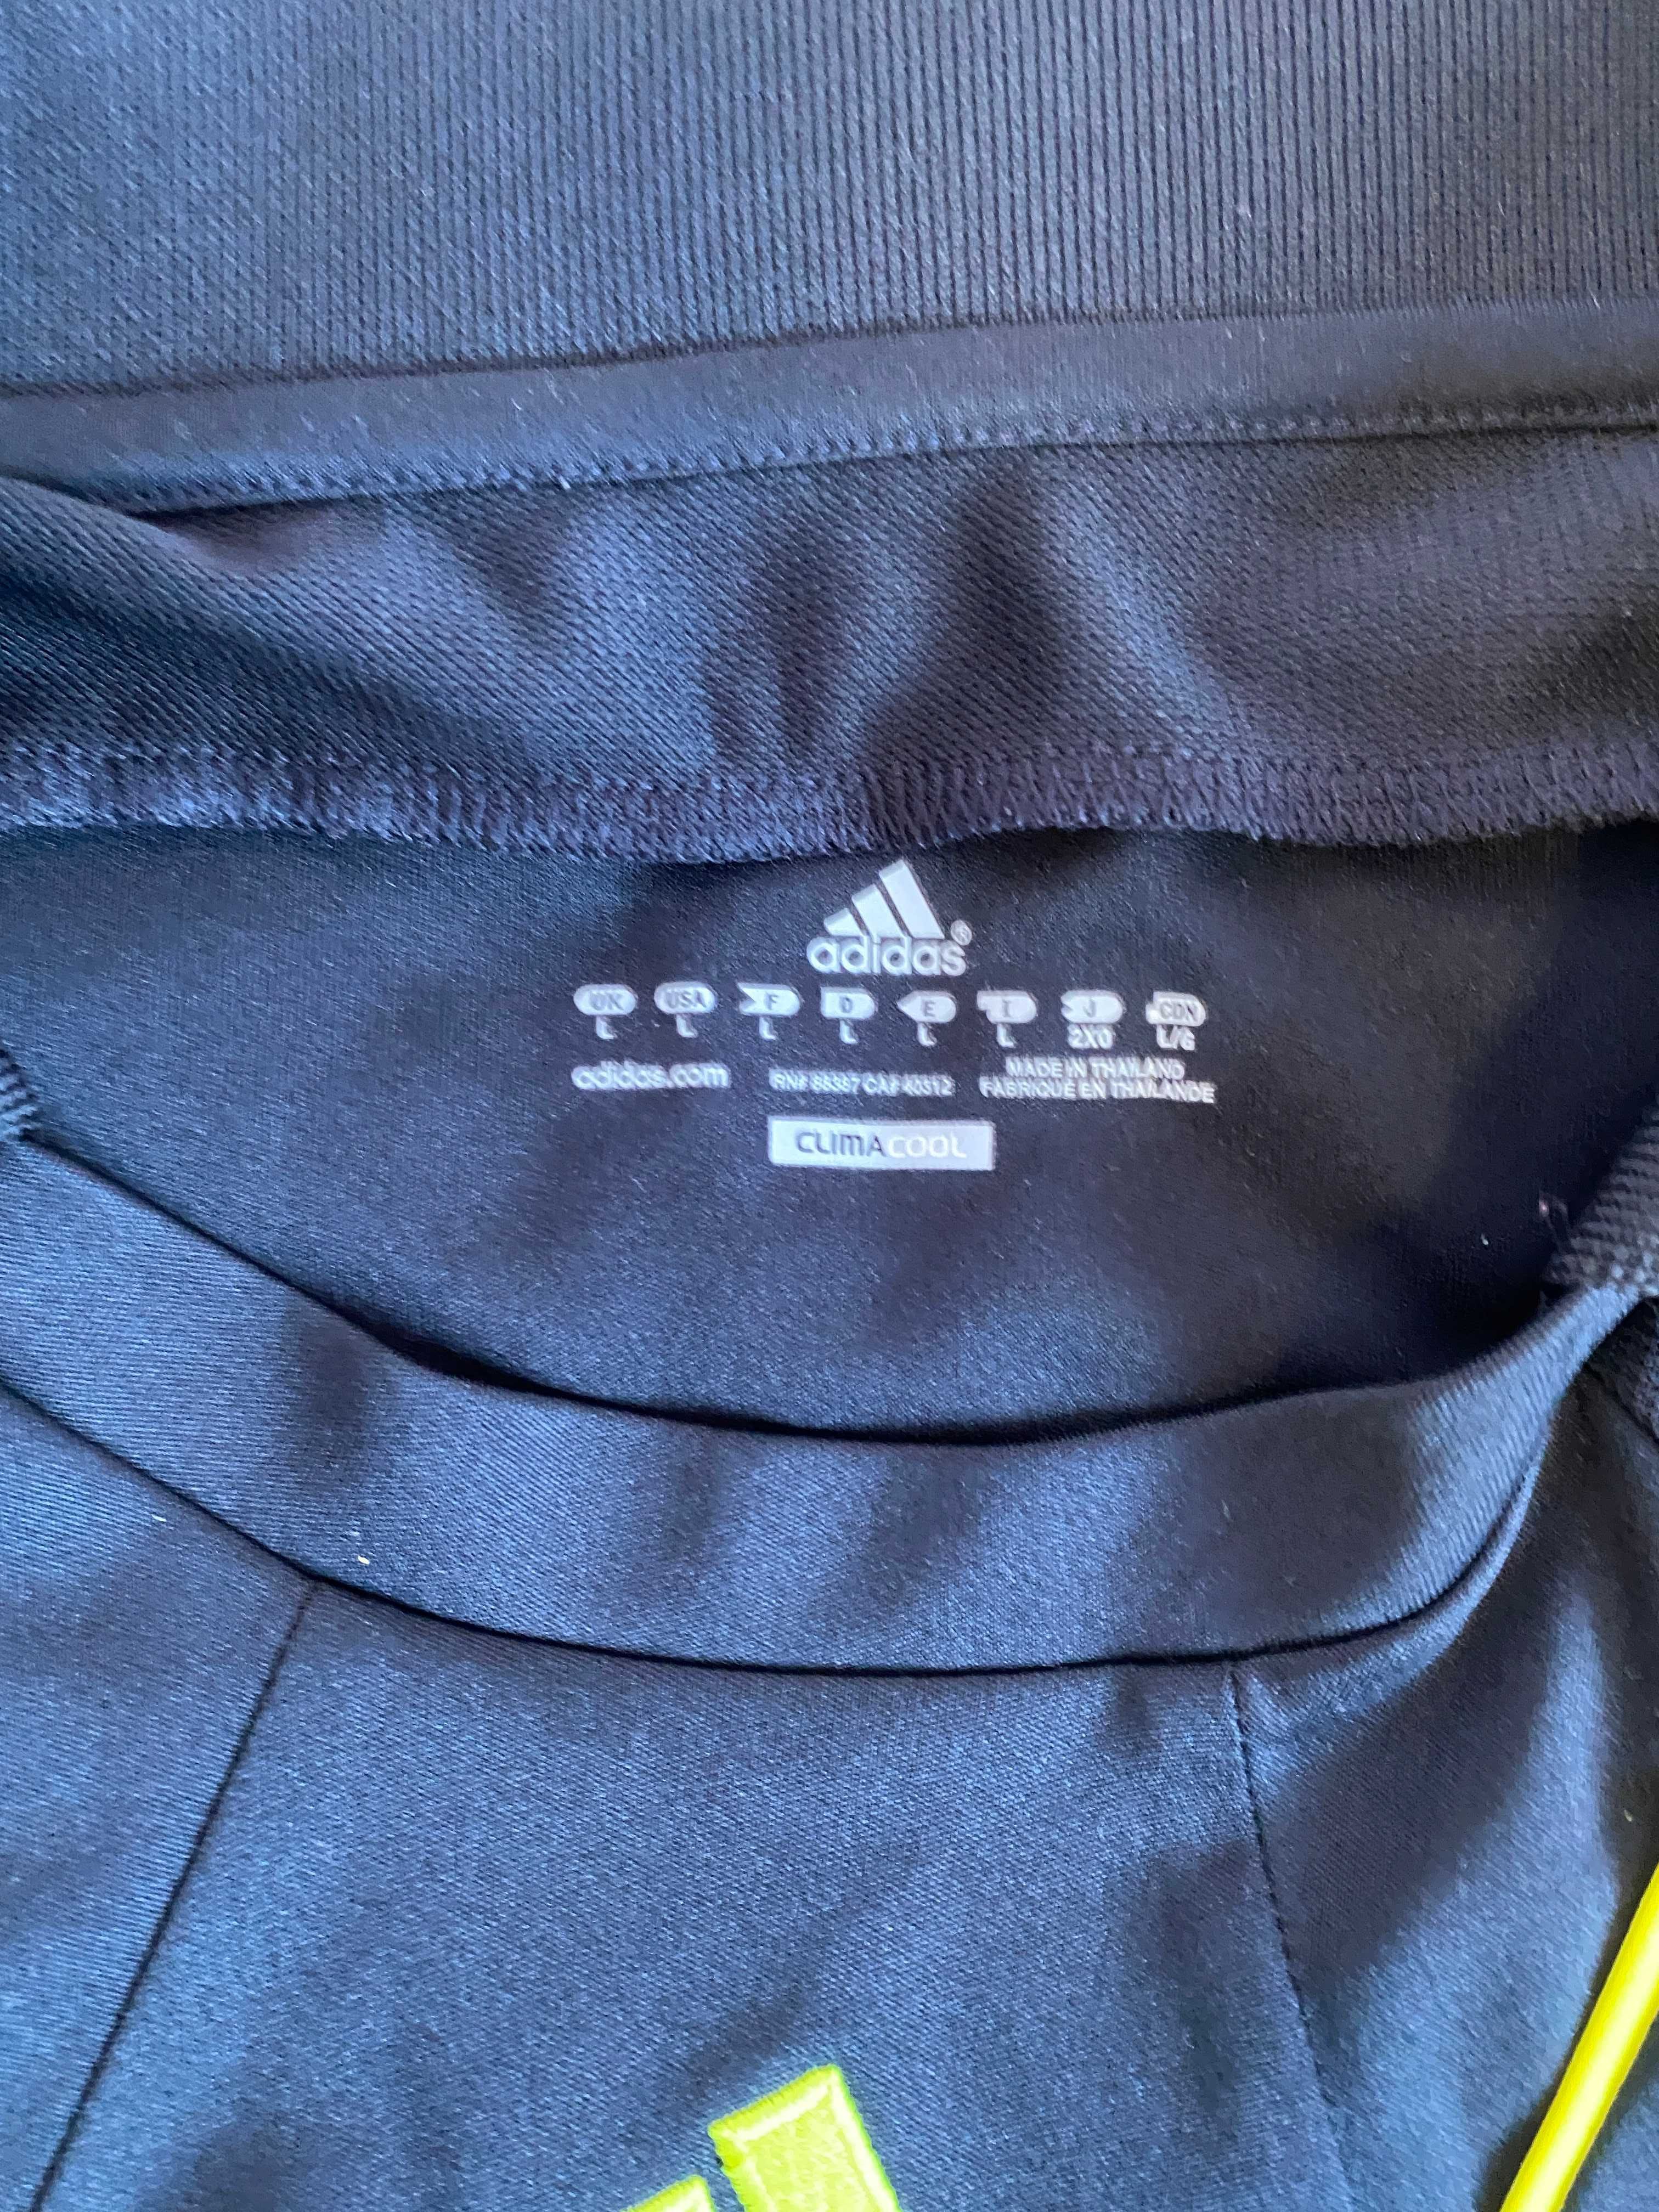 Adidas Referee судейская футболка рефери джерси р L оигинал